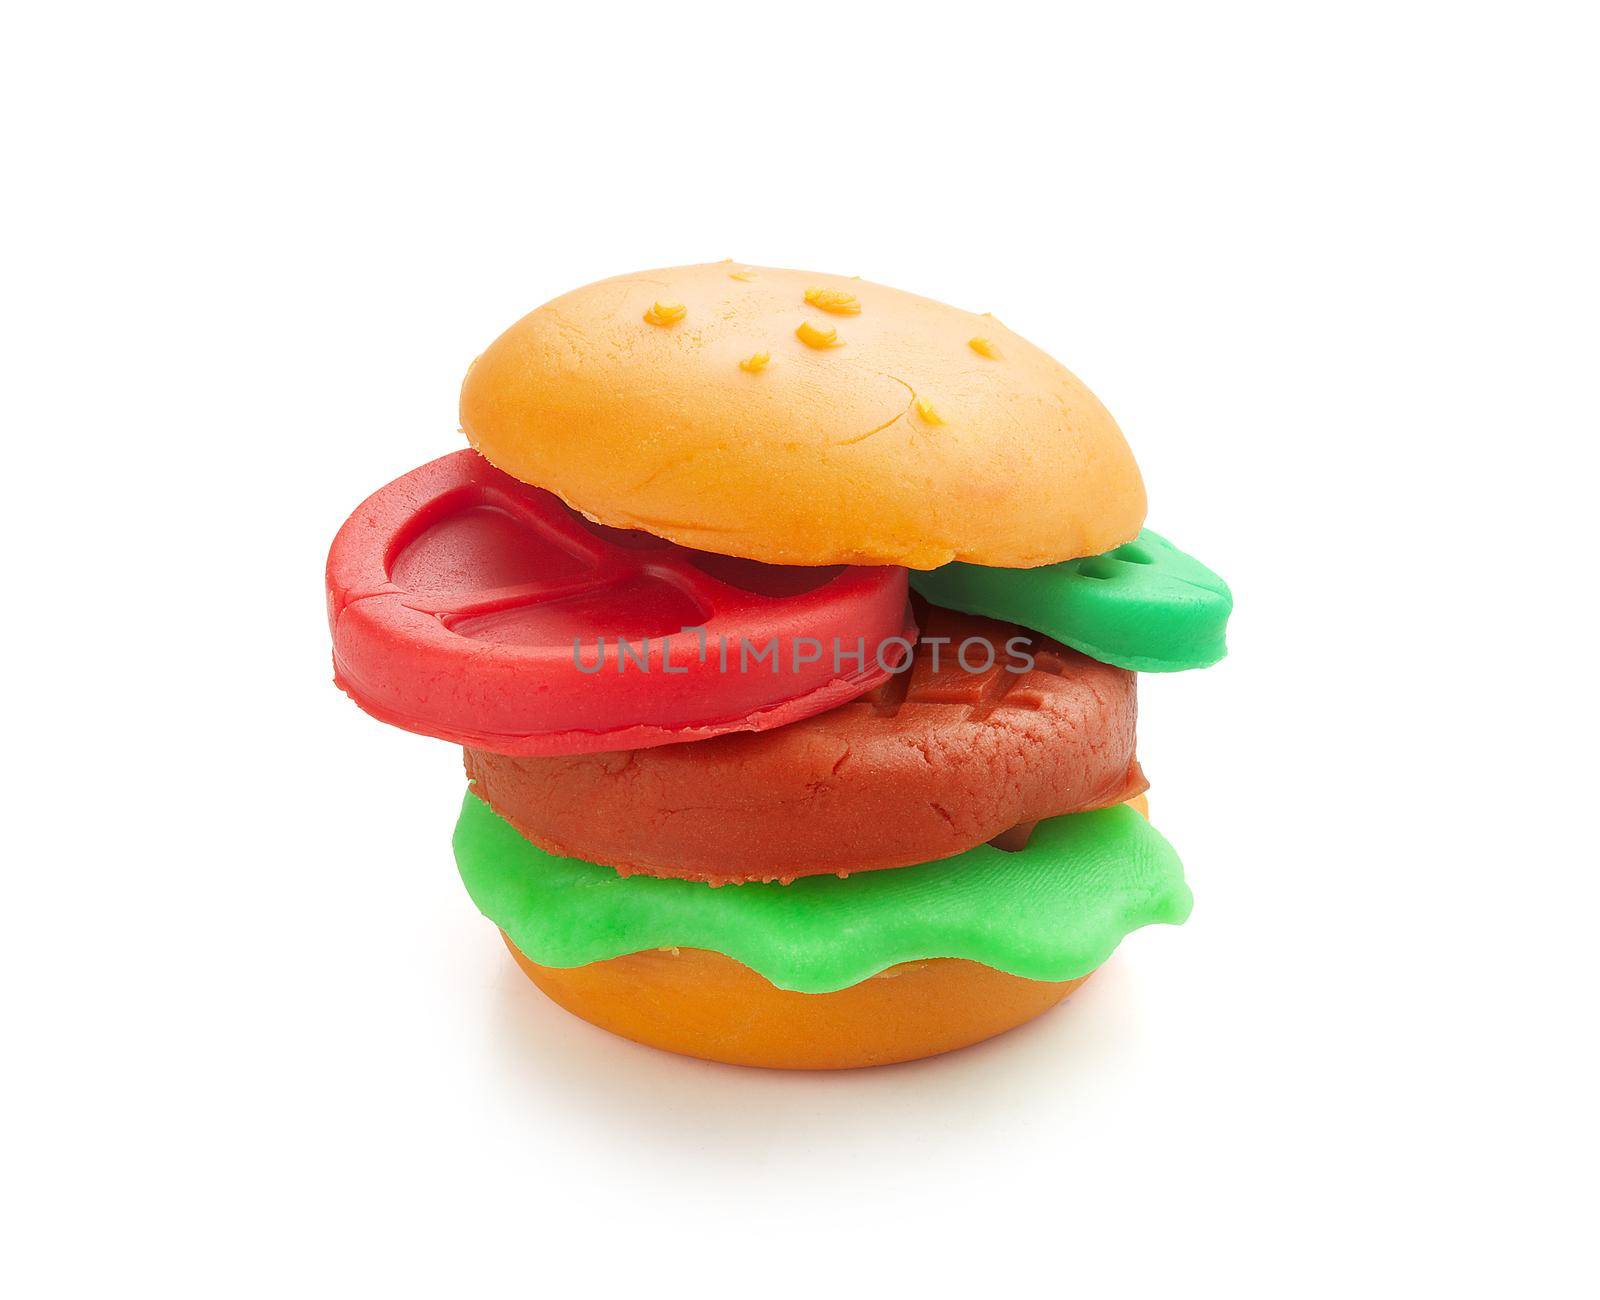 Isolated plasticine burger on the white background